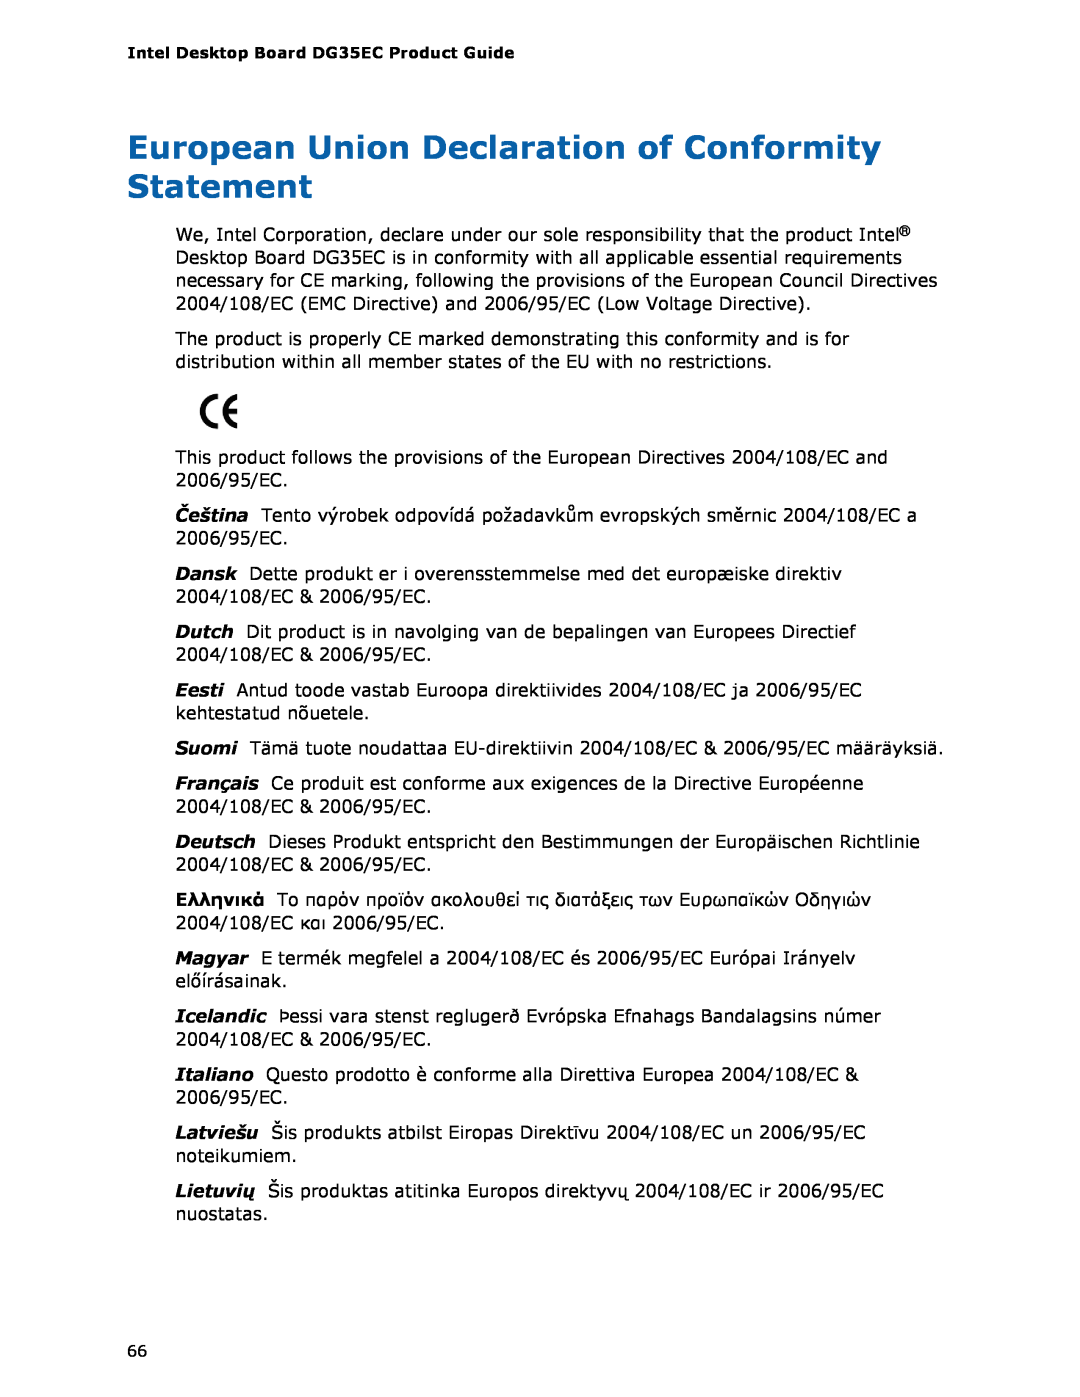 Intel Intel Desktop Board, DG35EC manual European Union Declaration of Conformity Statement 